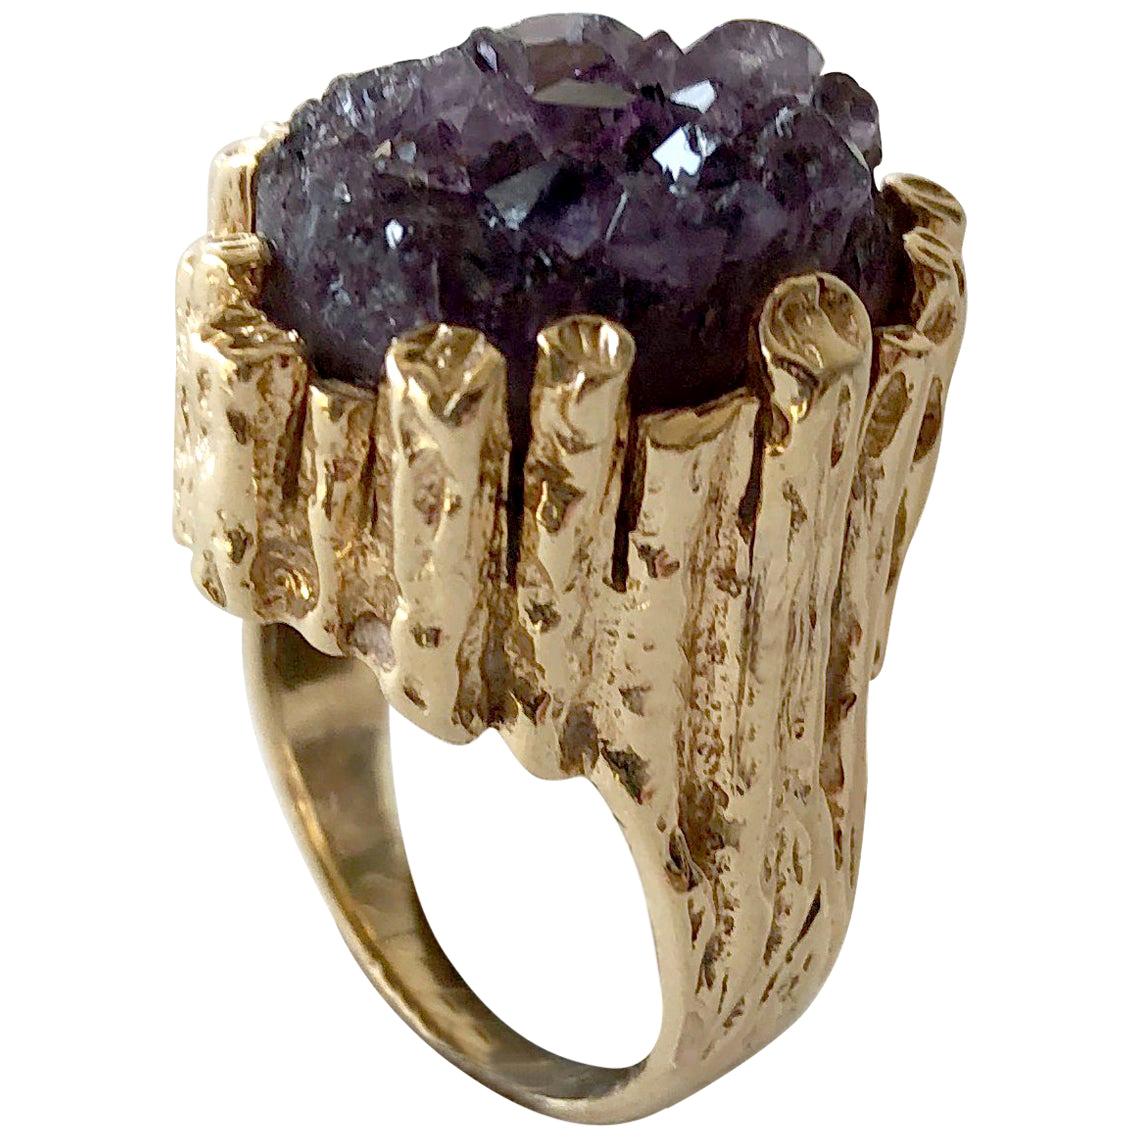 Gemstone Ring Gift for Women CHAMPAGNE Druzy Ring Raw Stone Ring Statement Ring Large Rock Gold Ring Large Stone Ring Boho Jewelry